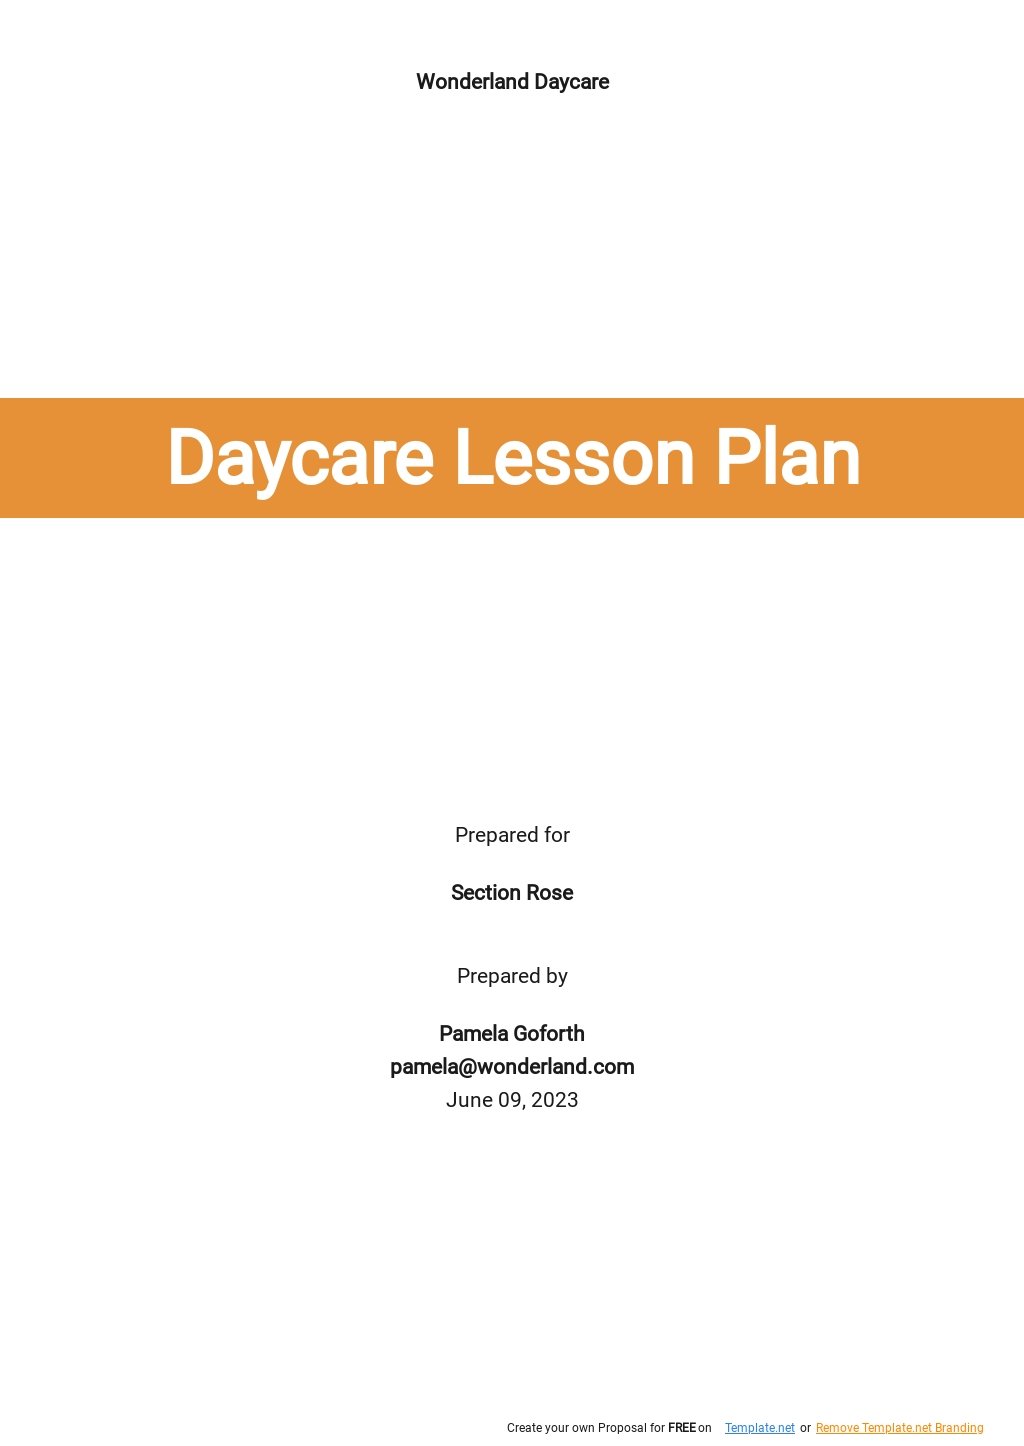 Sample Daycare Lesson Plan Template.jpe